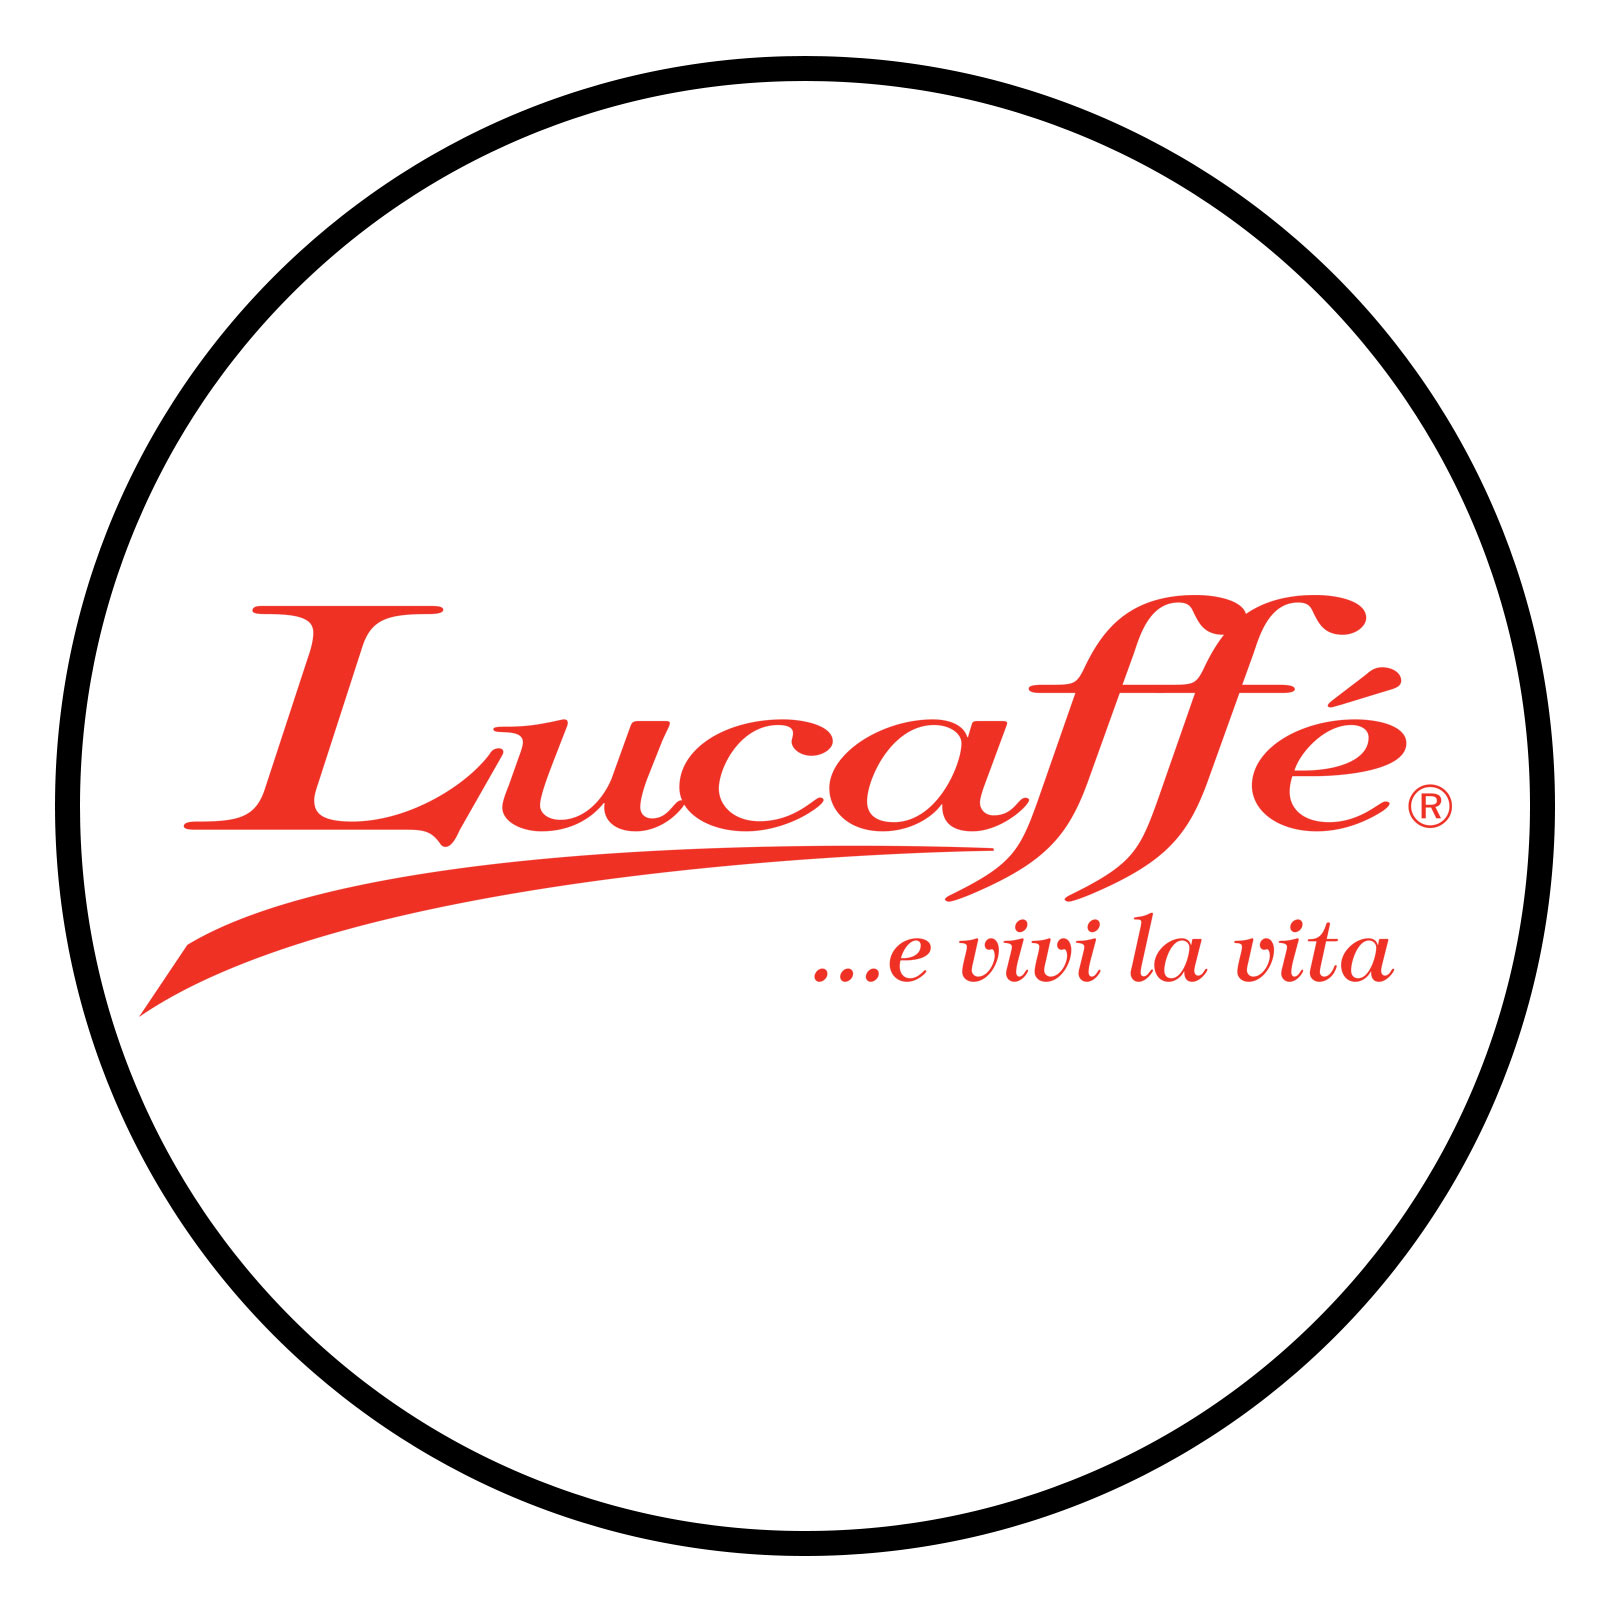 LA PICCOLA by Lucaffé